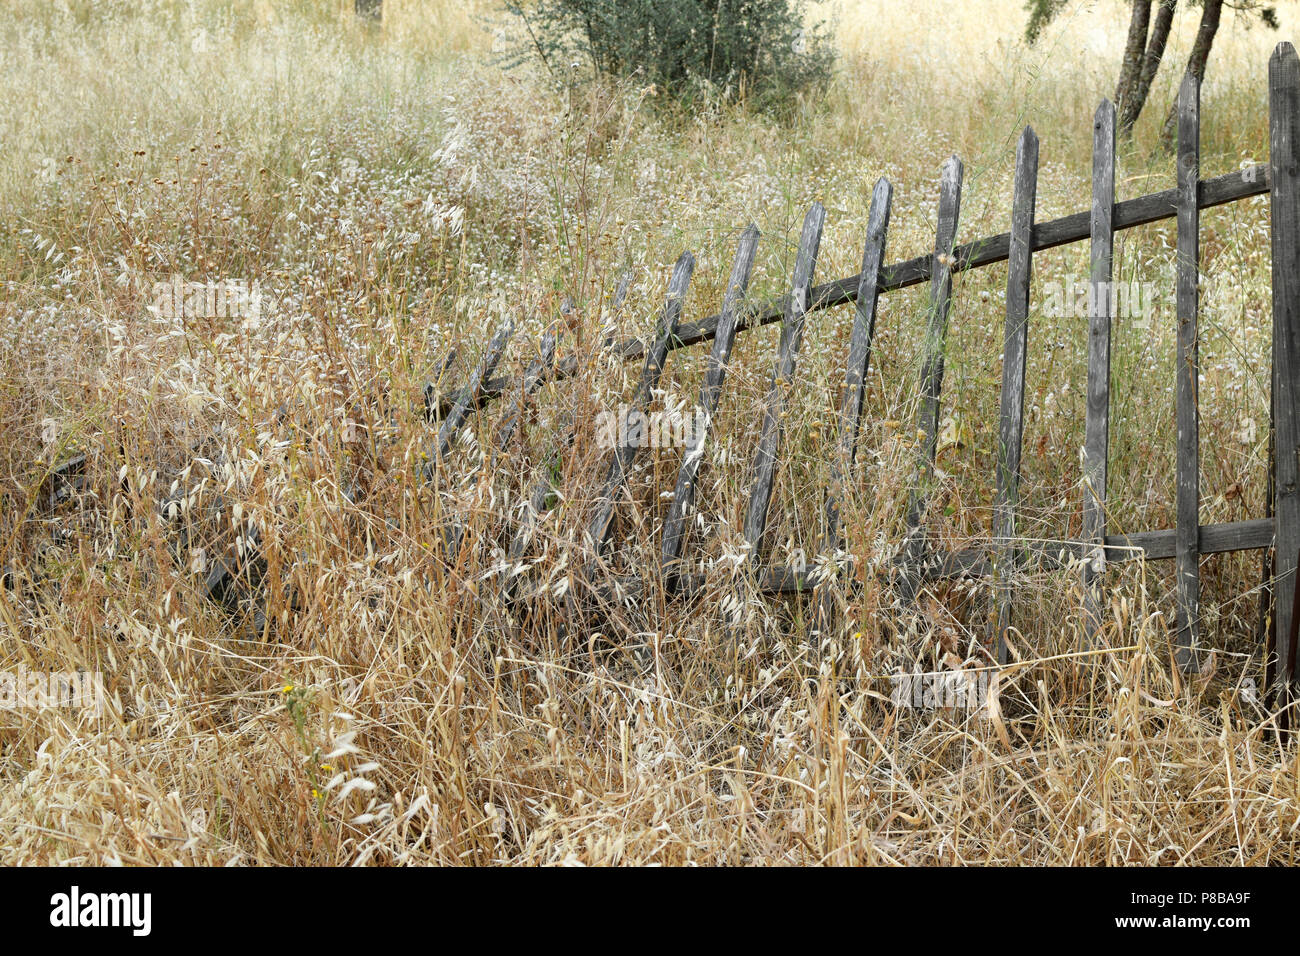 Broken wooden fence and overgrown dry plants. Summertime vegetation nature landscape. Stock Photo